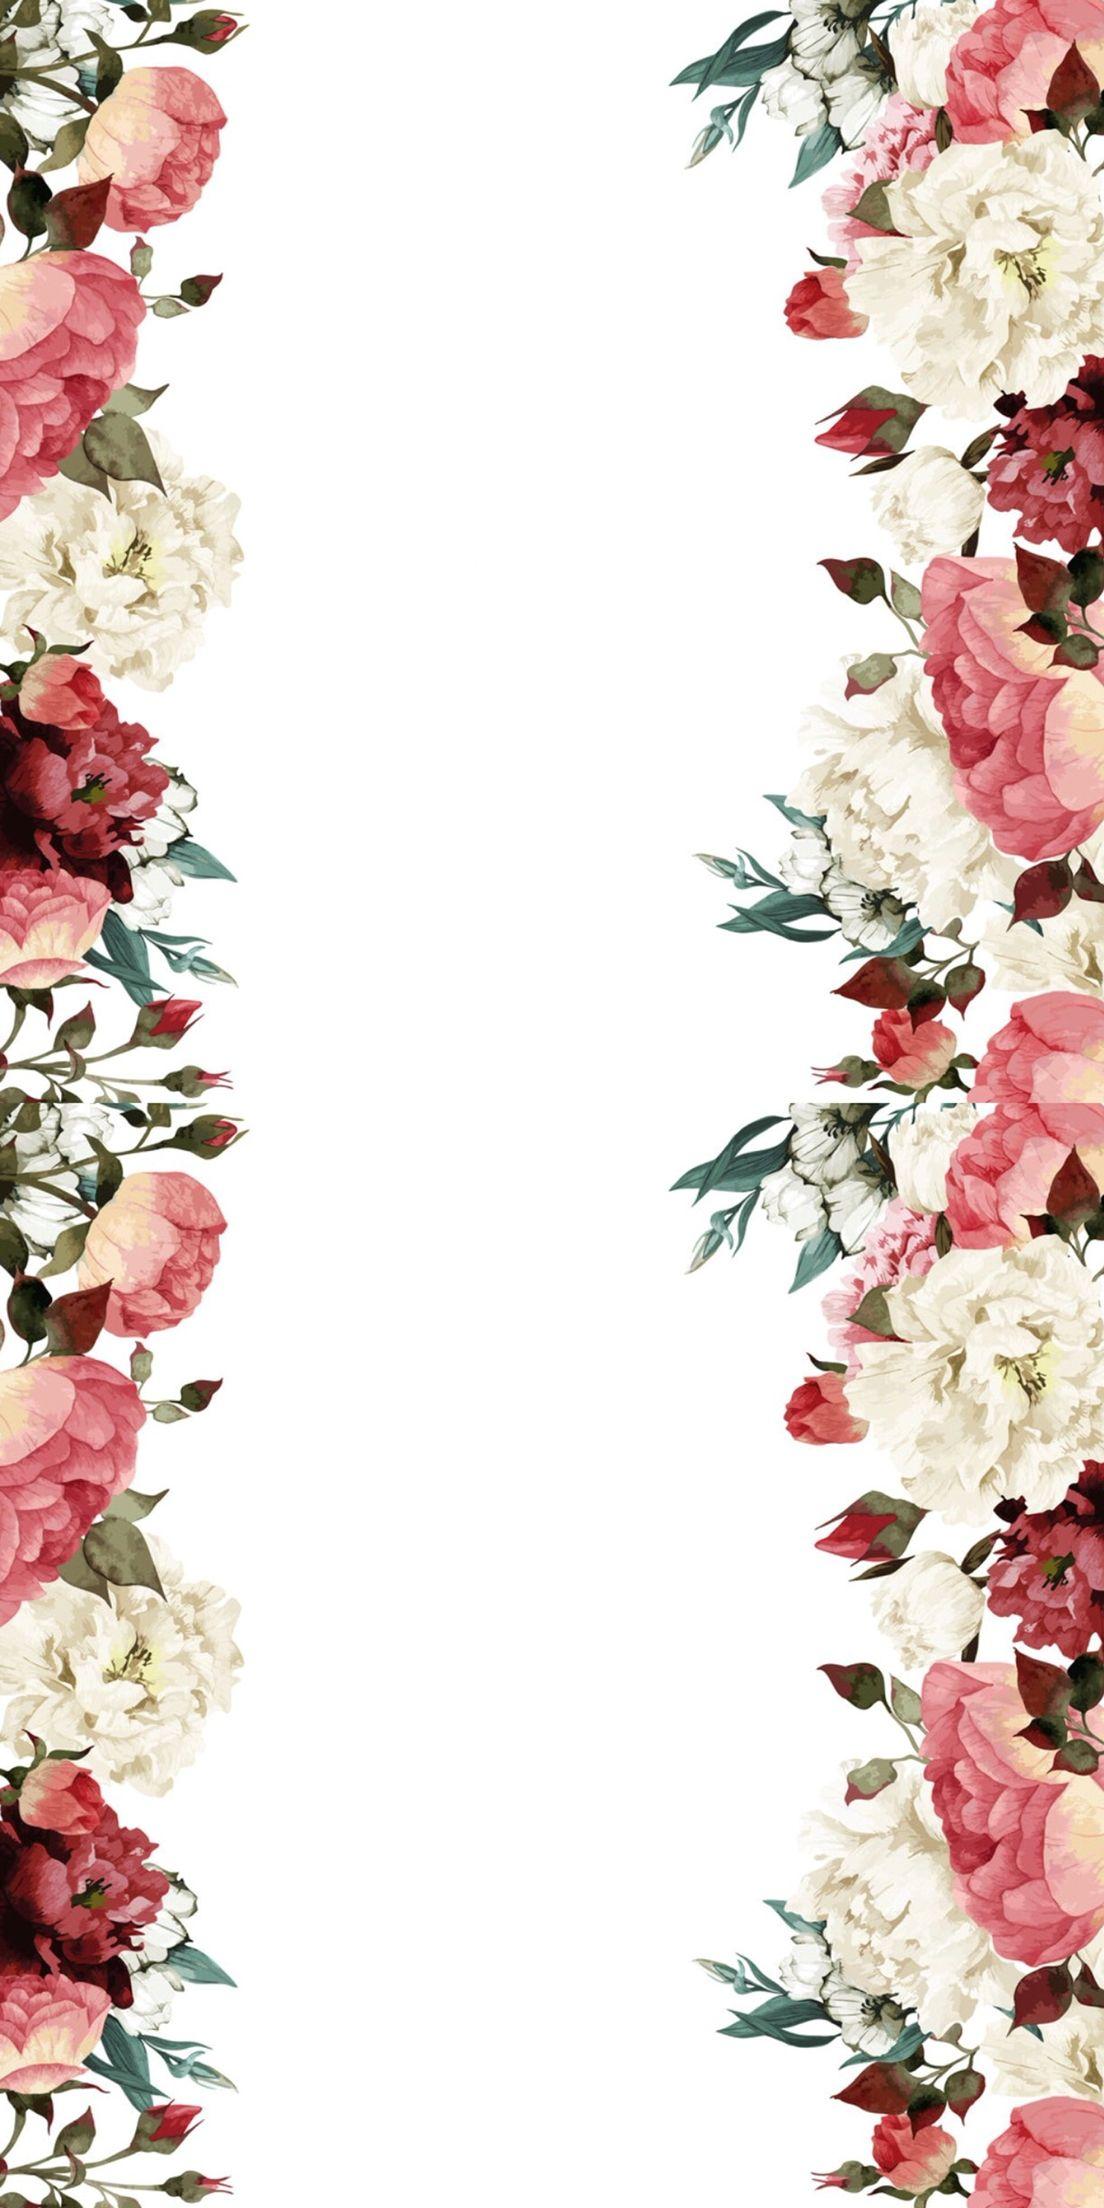 Retro Flower iPhone Wallpapers - Top